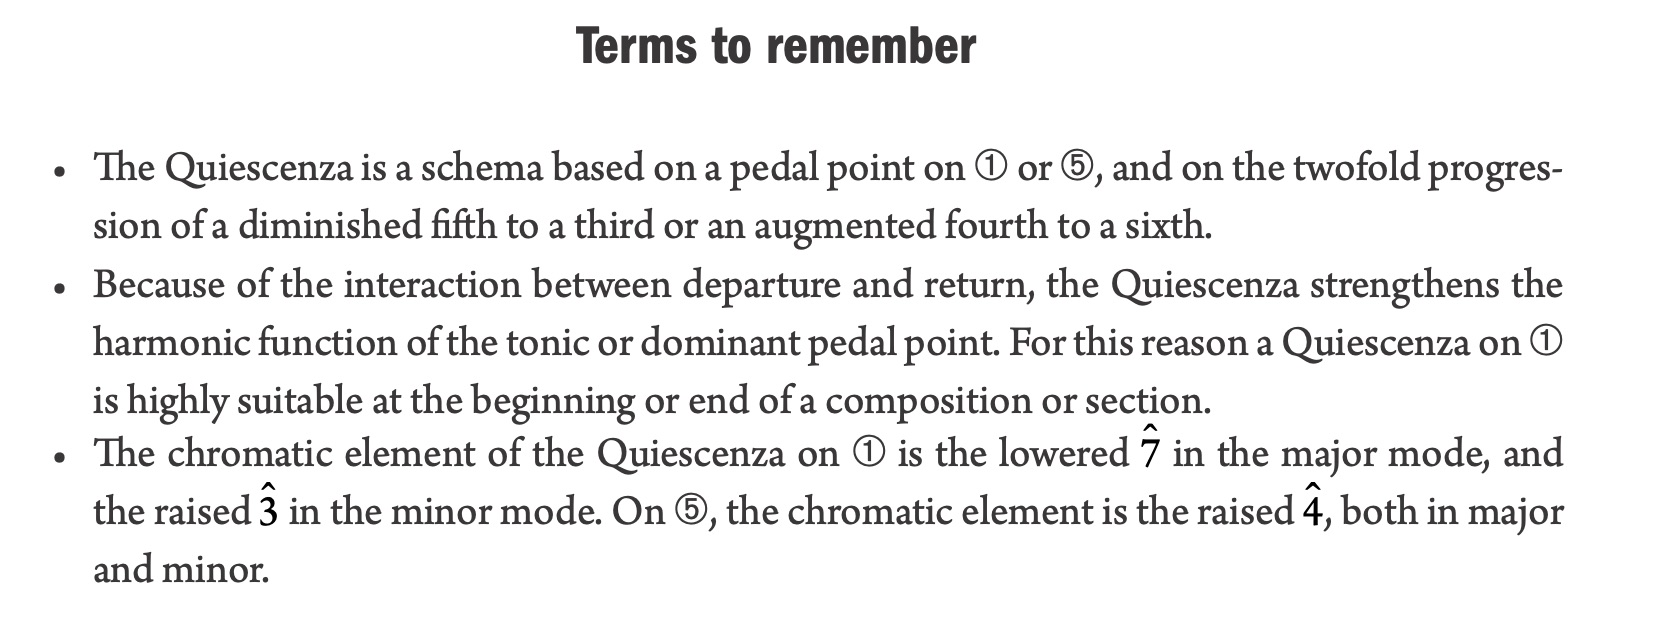 ijzerman terms to remember 5.2.jpg